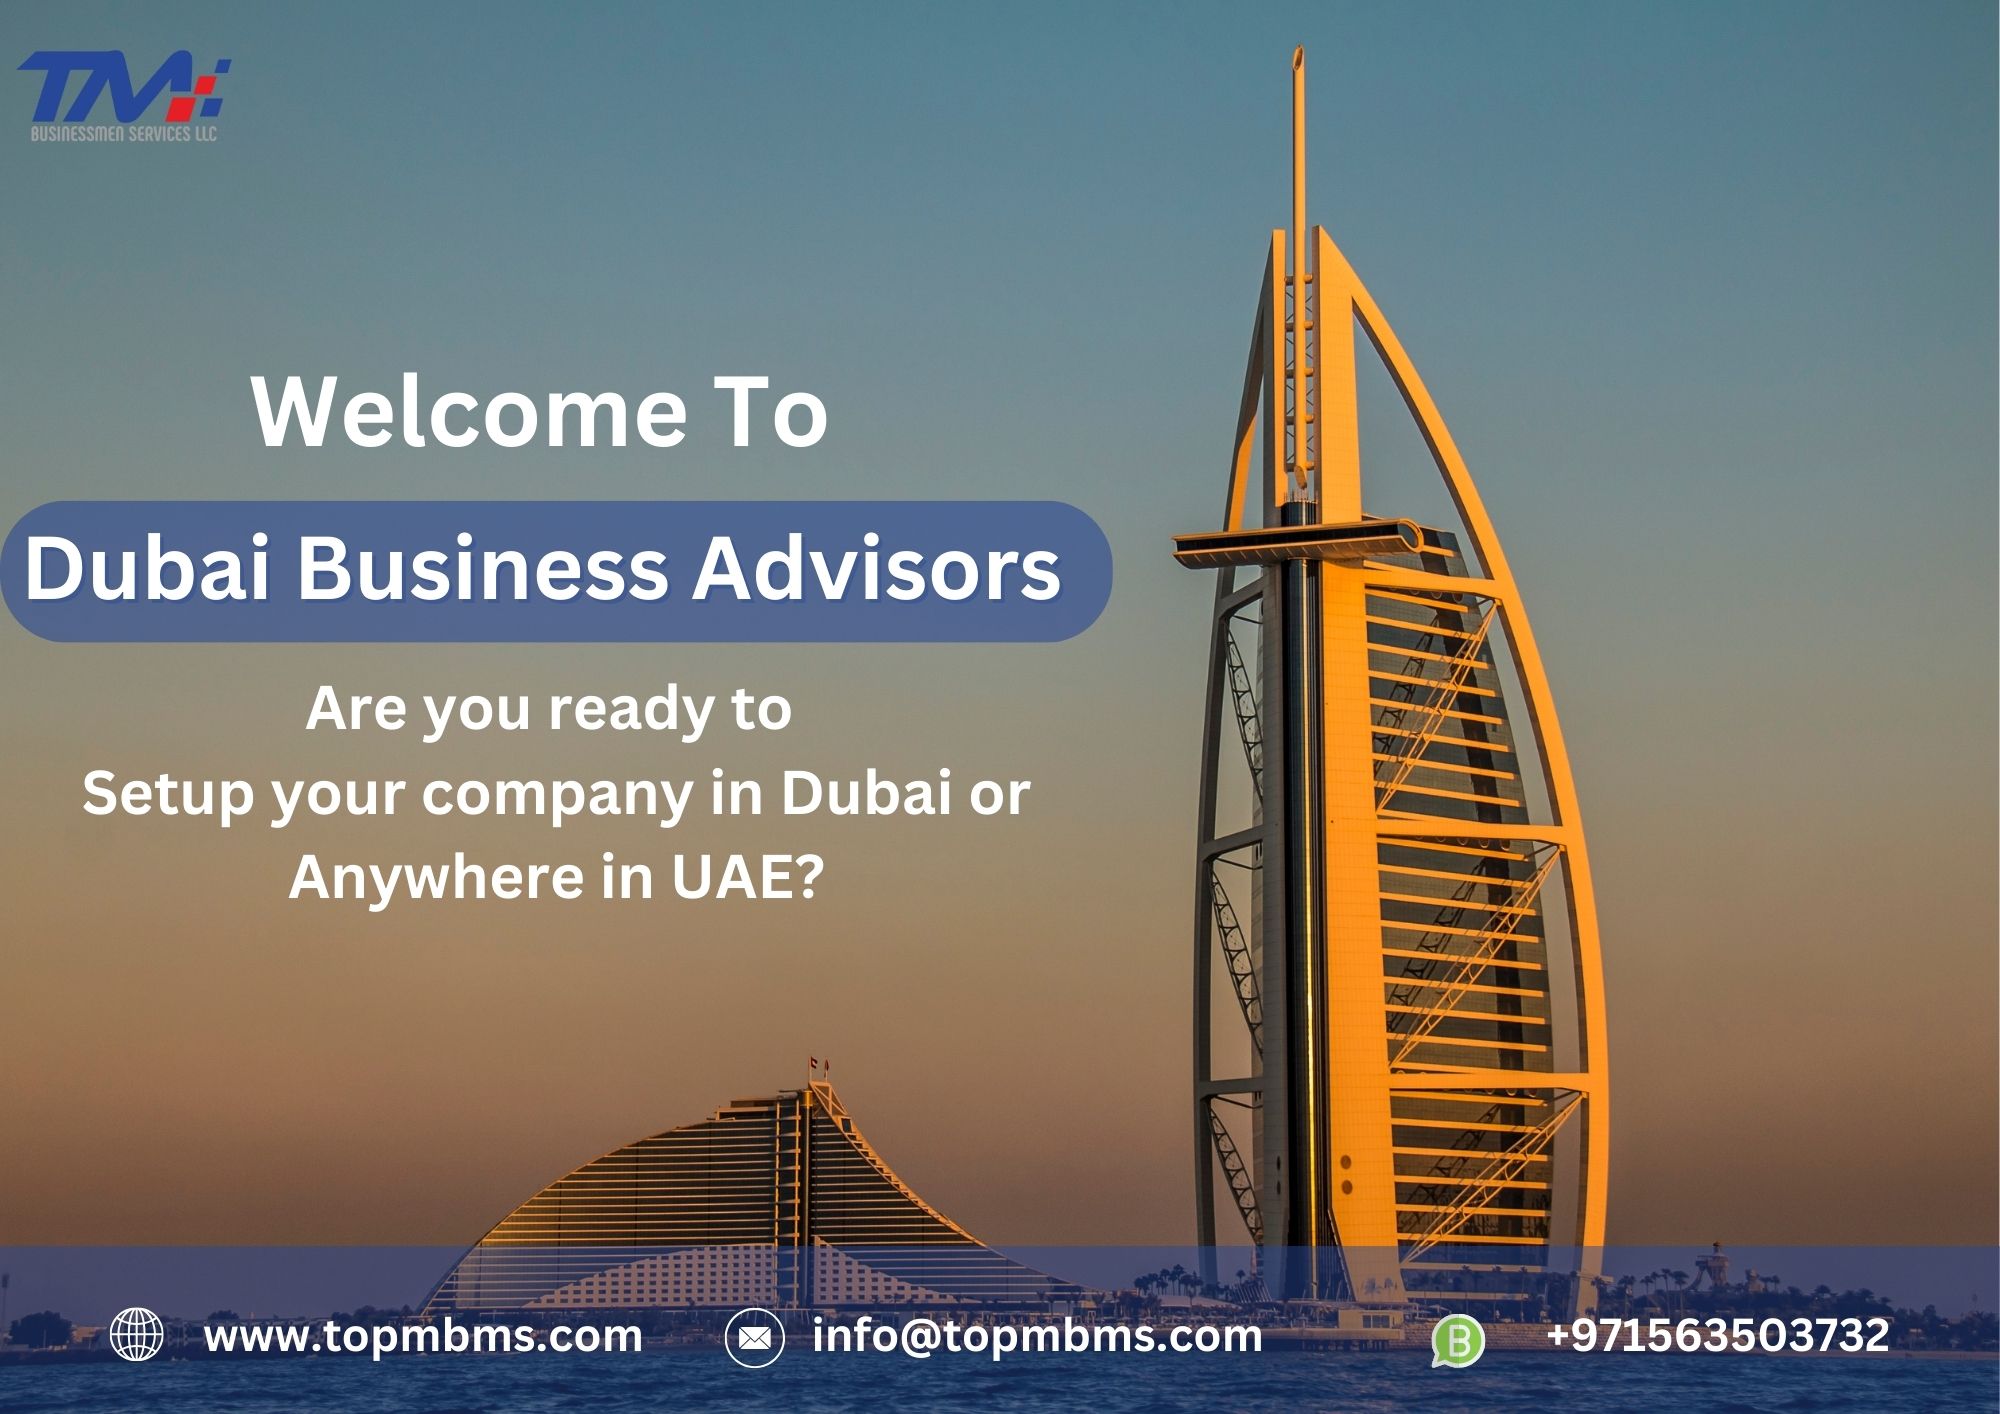 Dubai Business Advisors # 0563503402